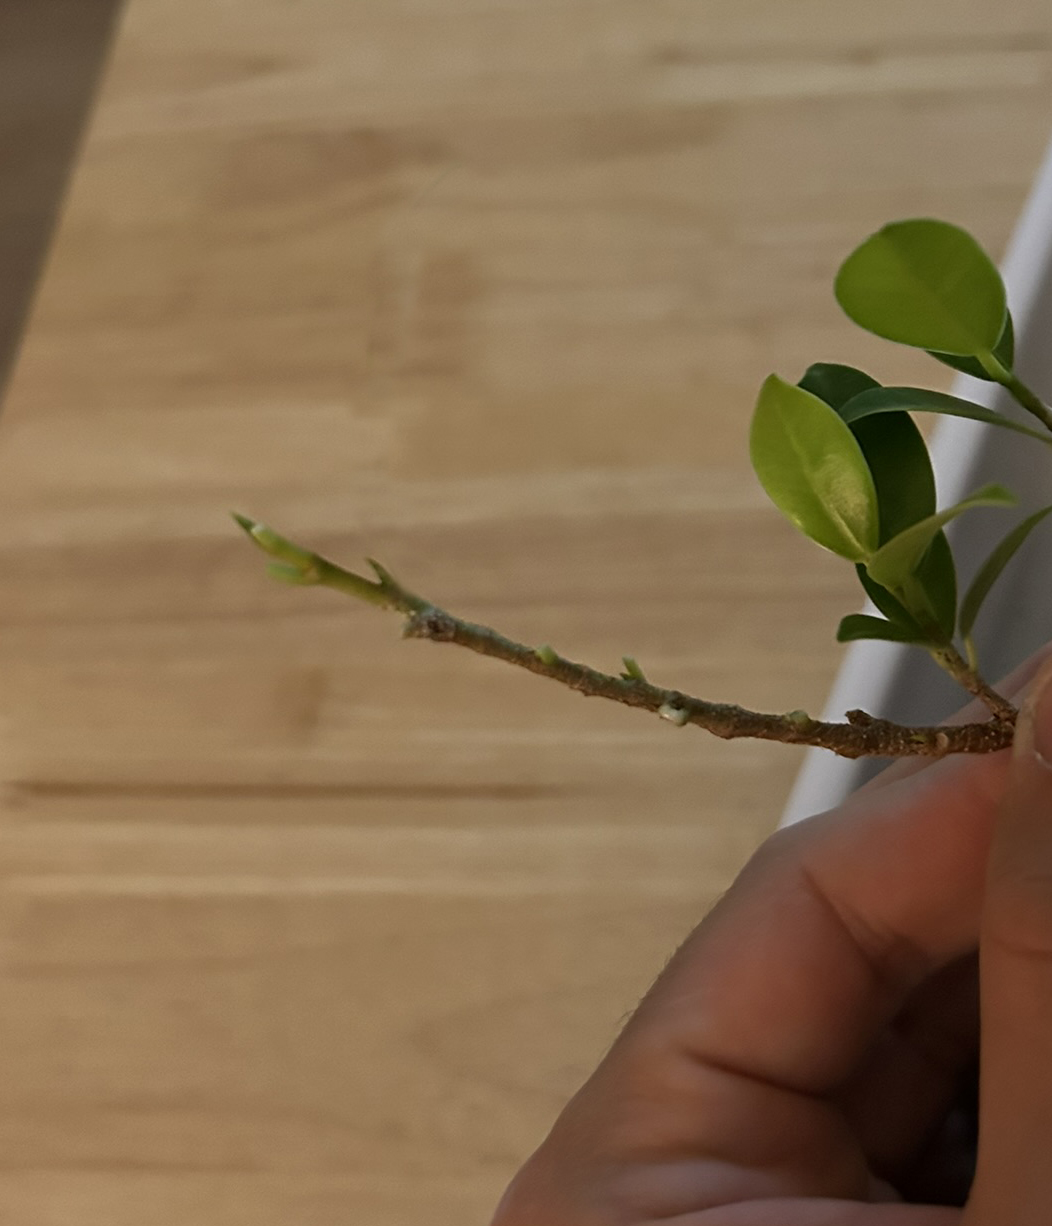 rama defoliada injerto bonsai